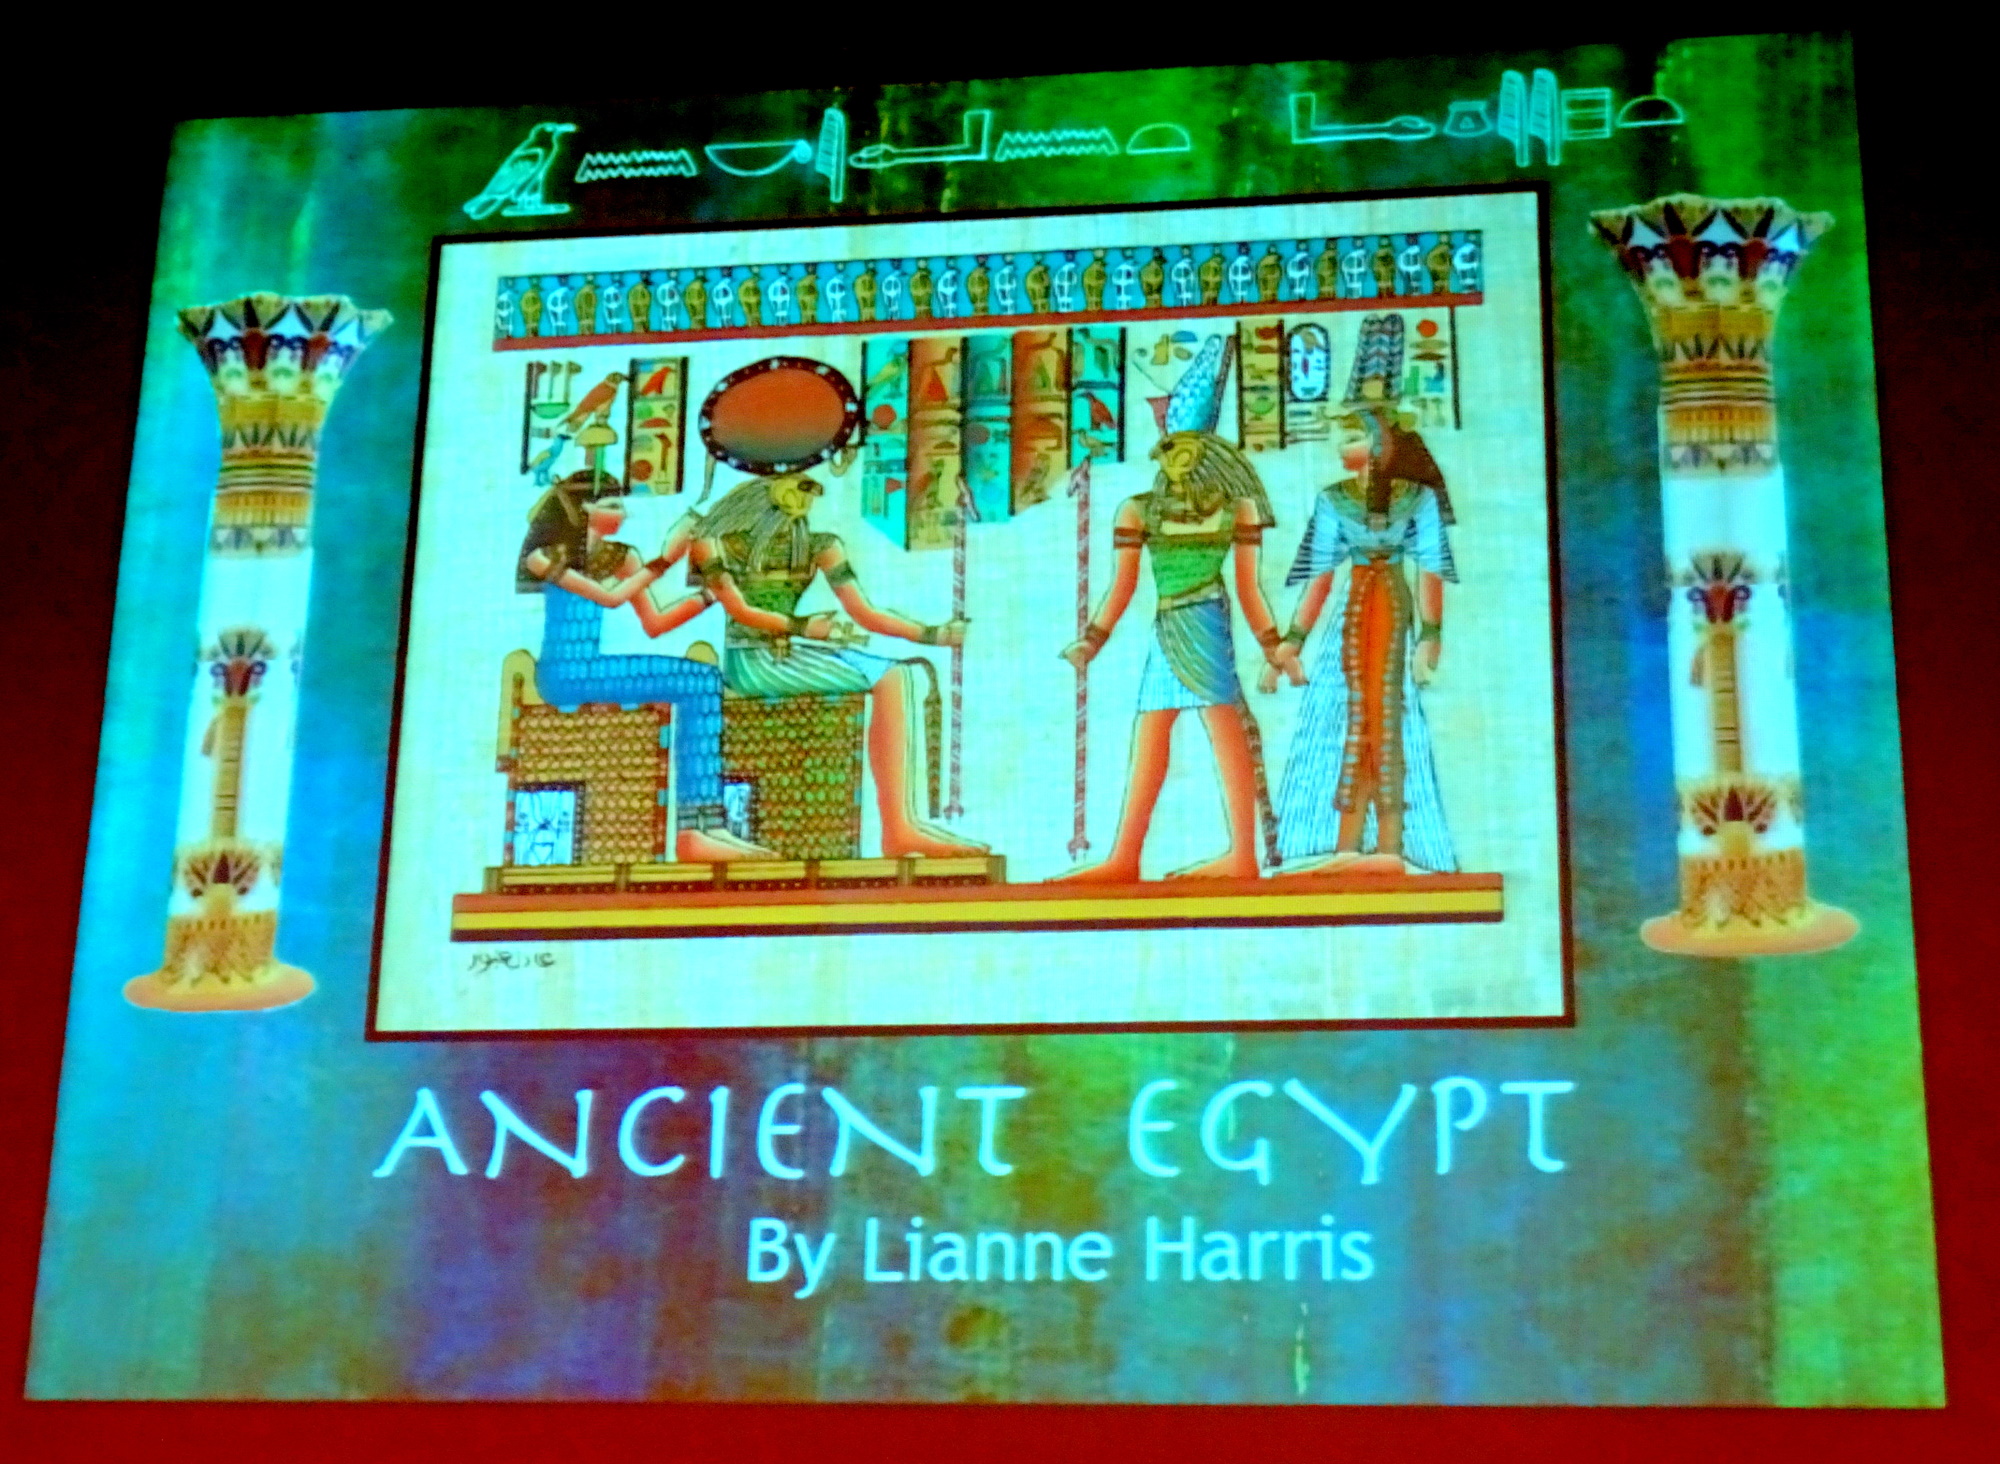 Ancient Egypt by Lianne Harris at VIVA Mississauga 24 Feb 2020